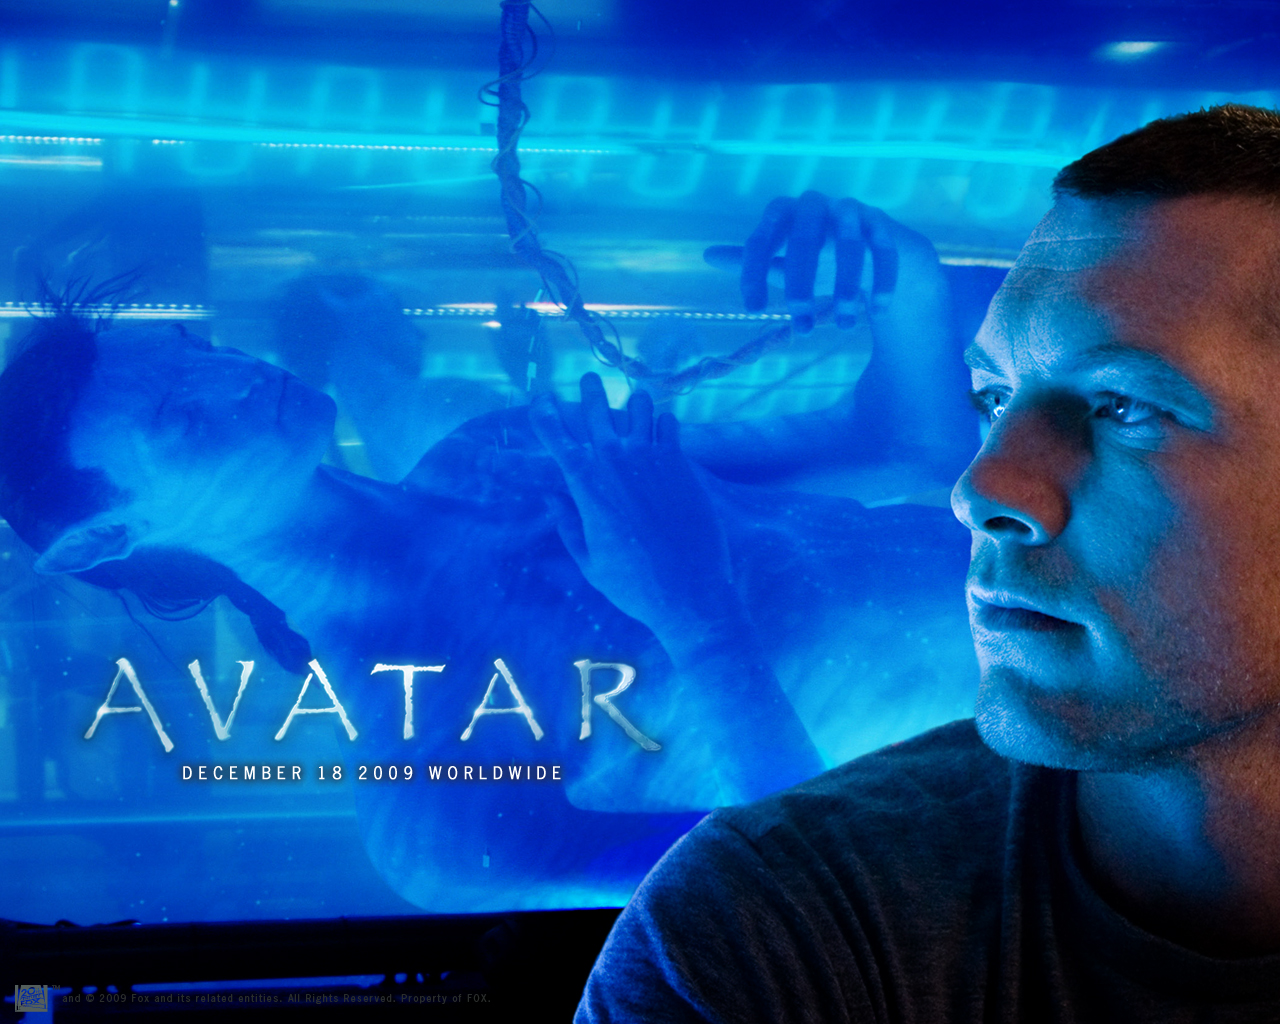 James Cameron's "Avatar" desktop wallpaper number 1 (1280 x 1024 pixels)